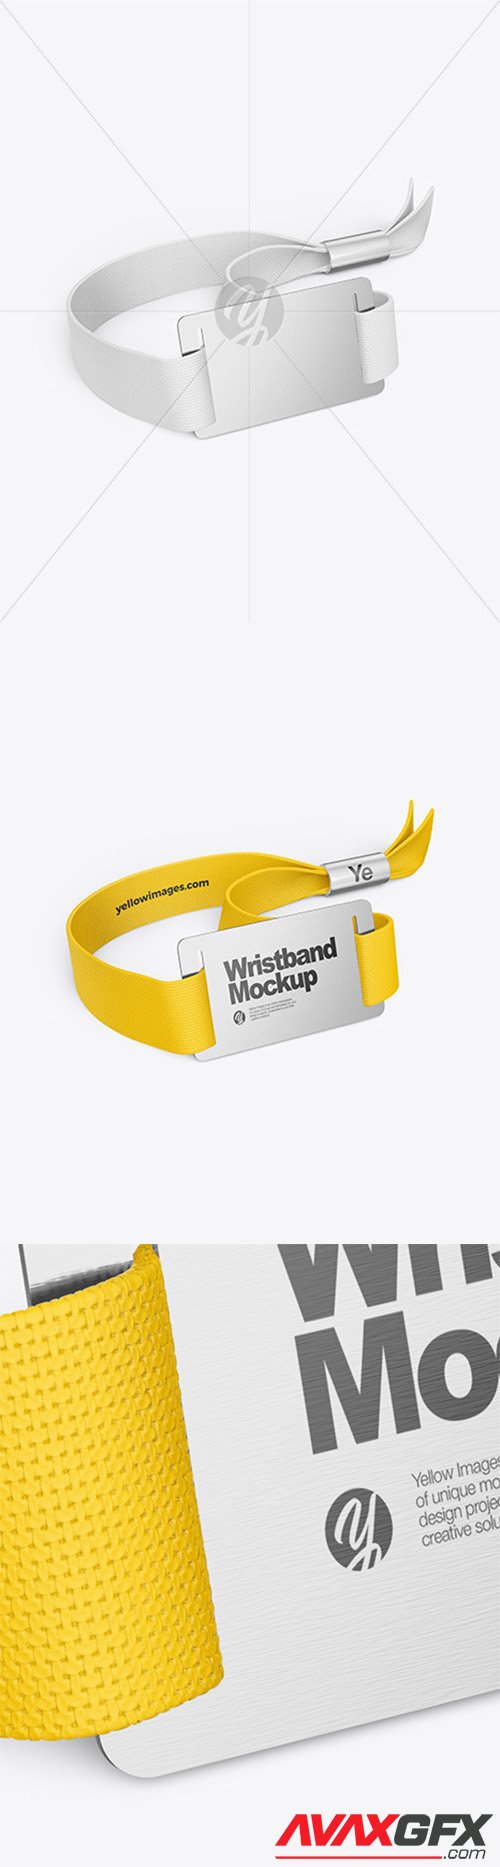 Wristband Mockup 80059